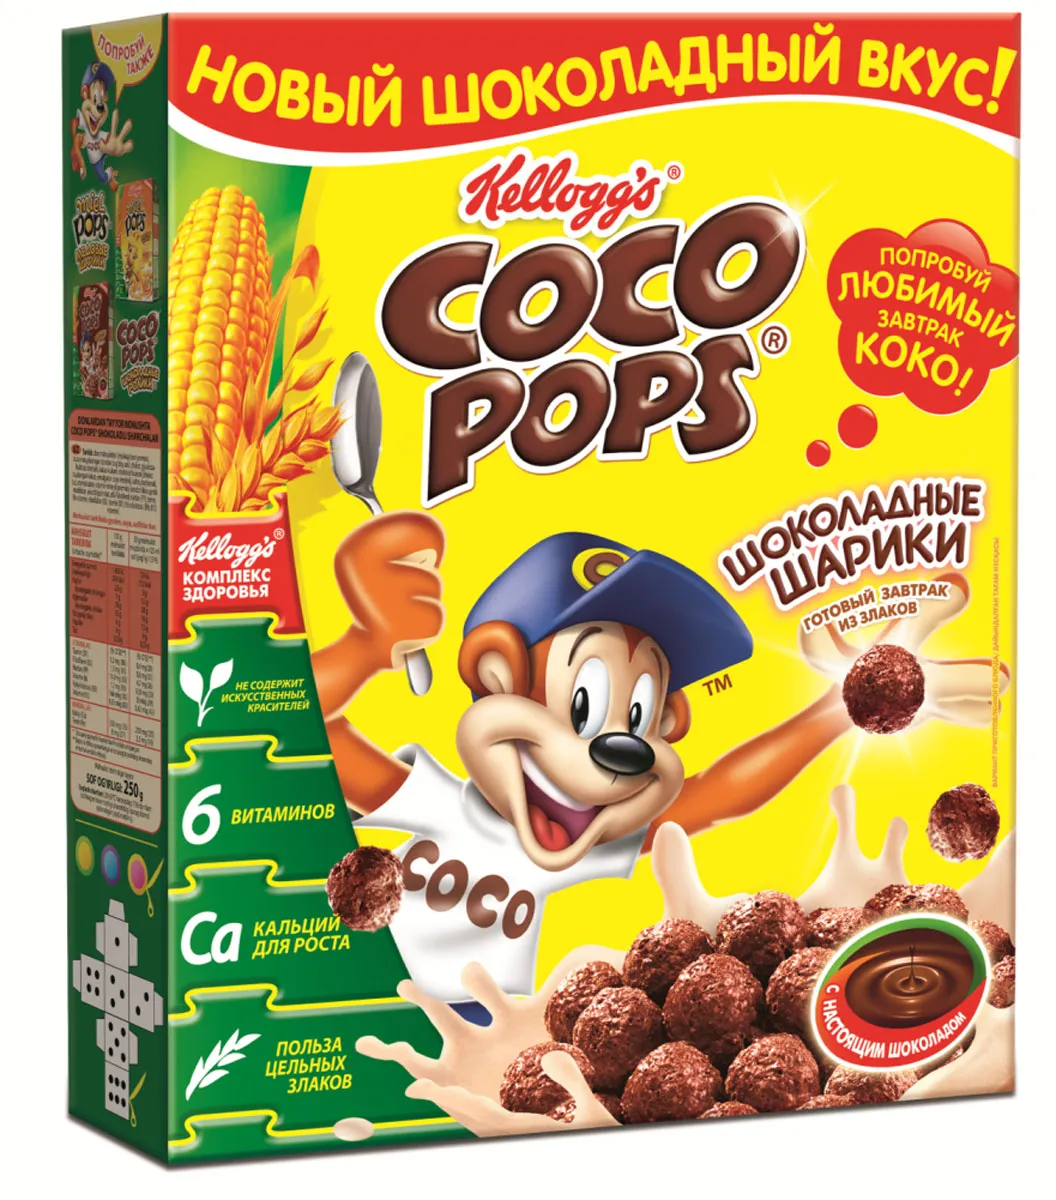 Готовый завтрак Coco Pops, Kellogg's, 350/550 г, Франция